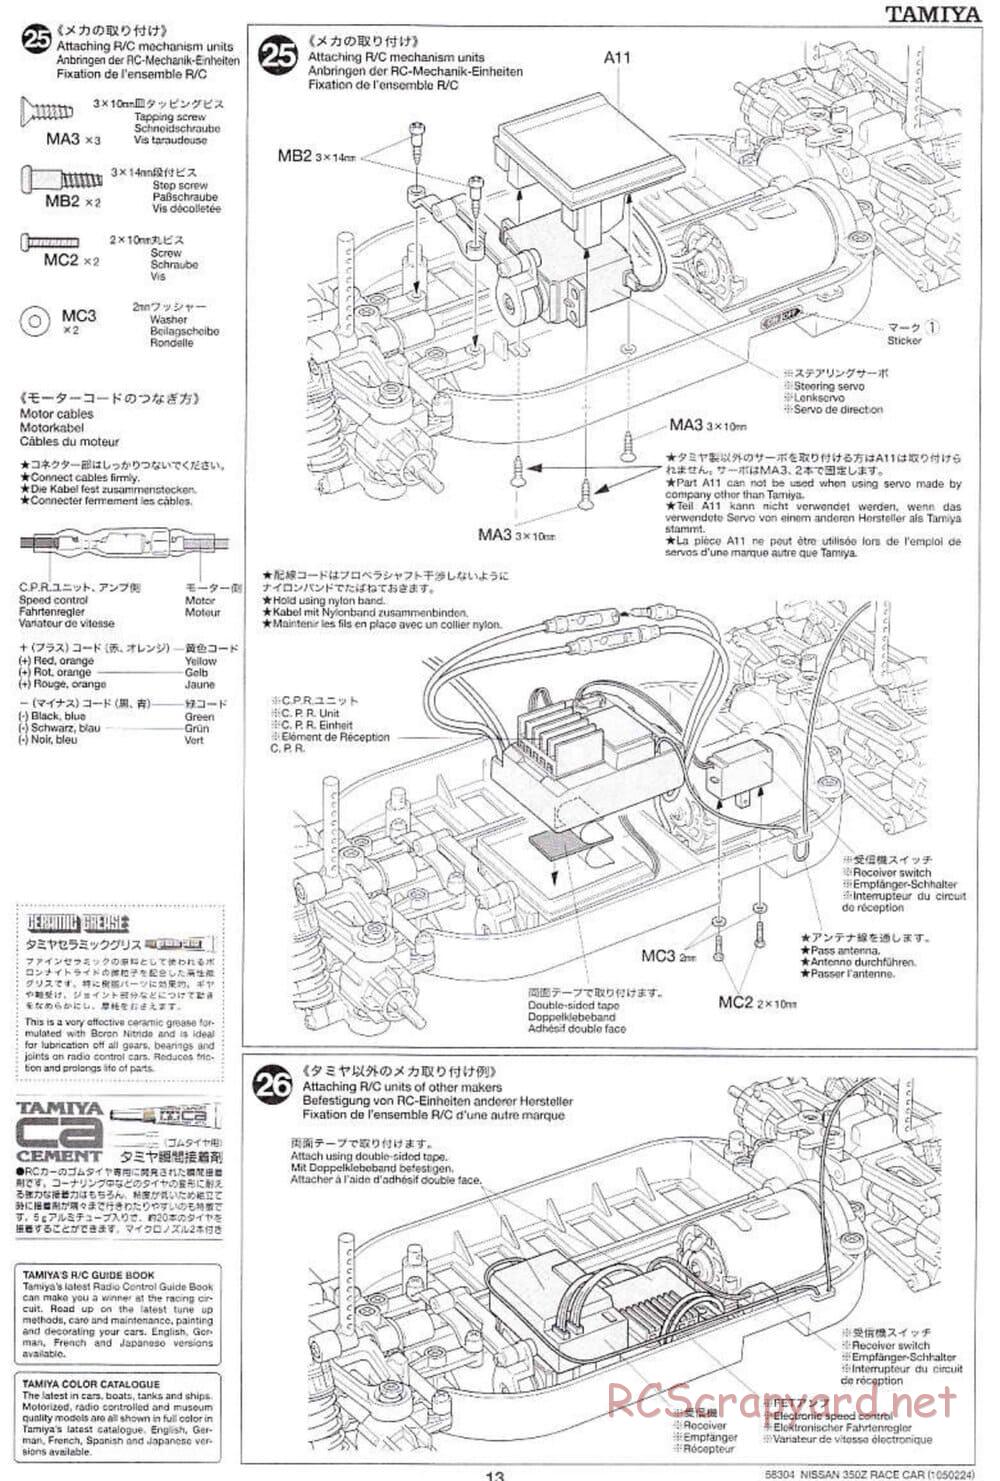 Tamiya - Nissan 350Z Race-Car - TT-01 Chassis - Manual - Page 13